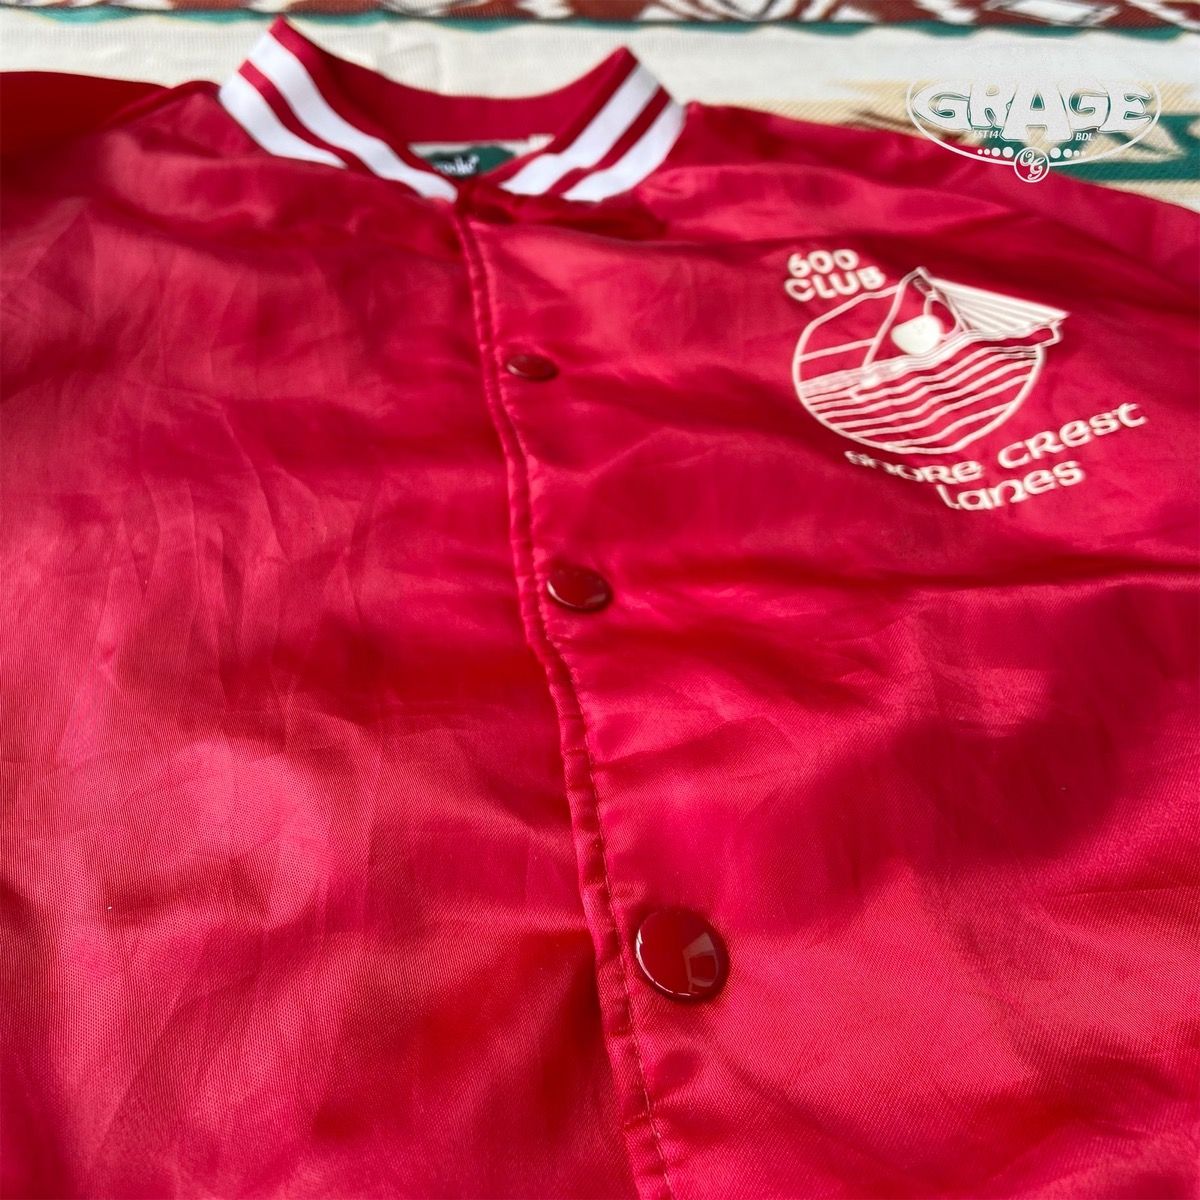 Vintage - DUNBROOKE 600 club Shore Crest Lanes Satin Varsity Jacket - 4